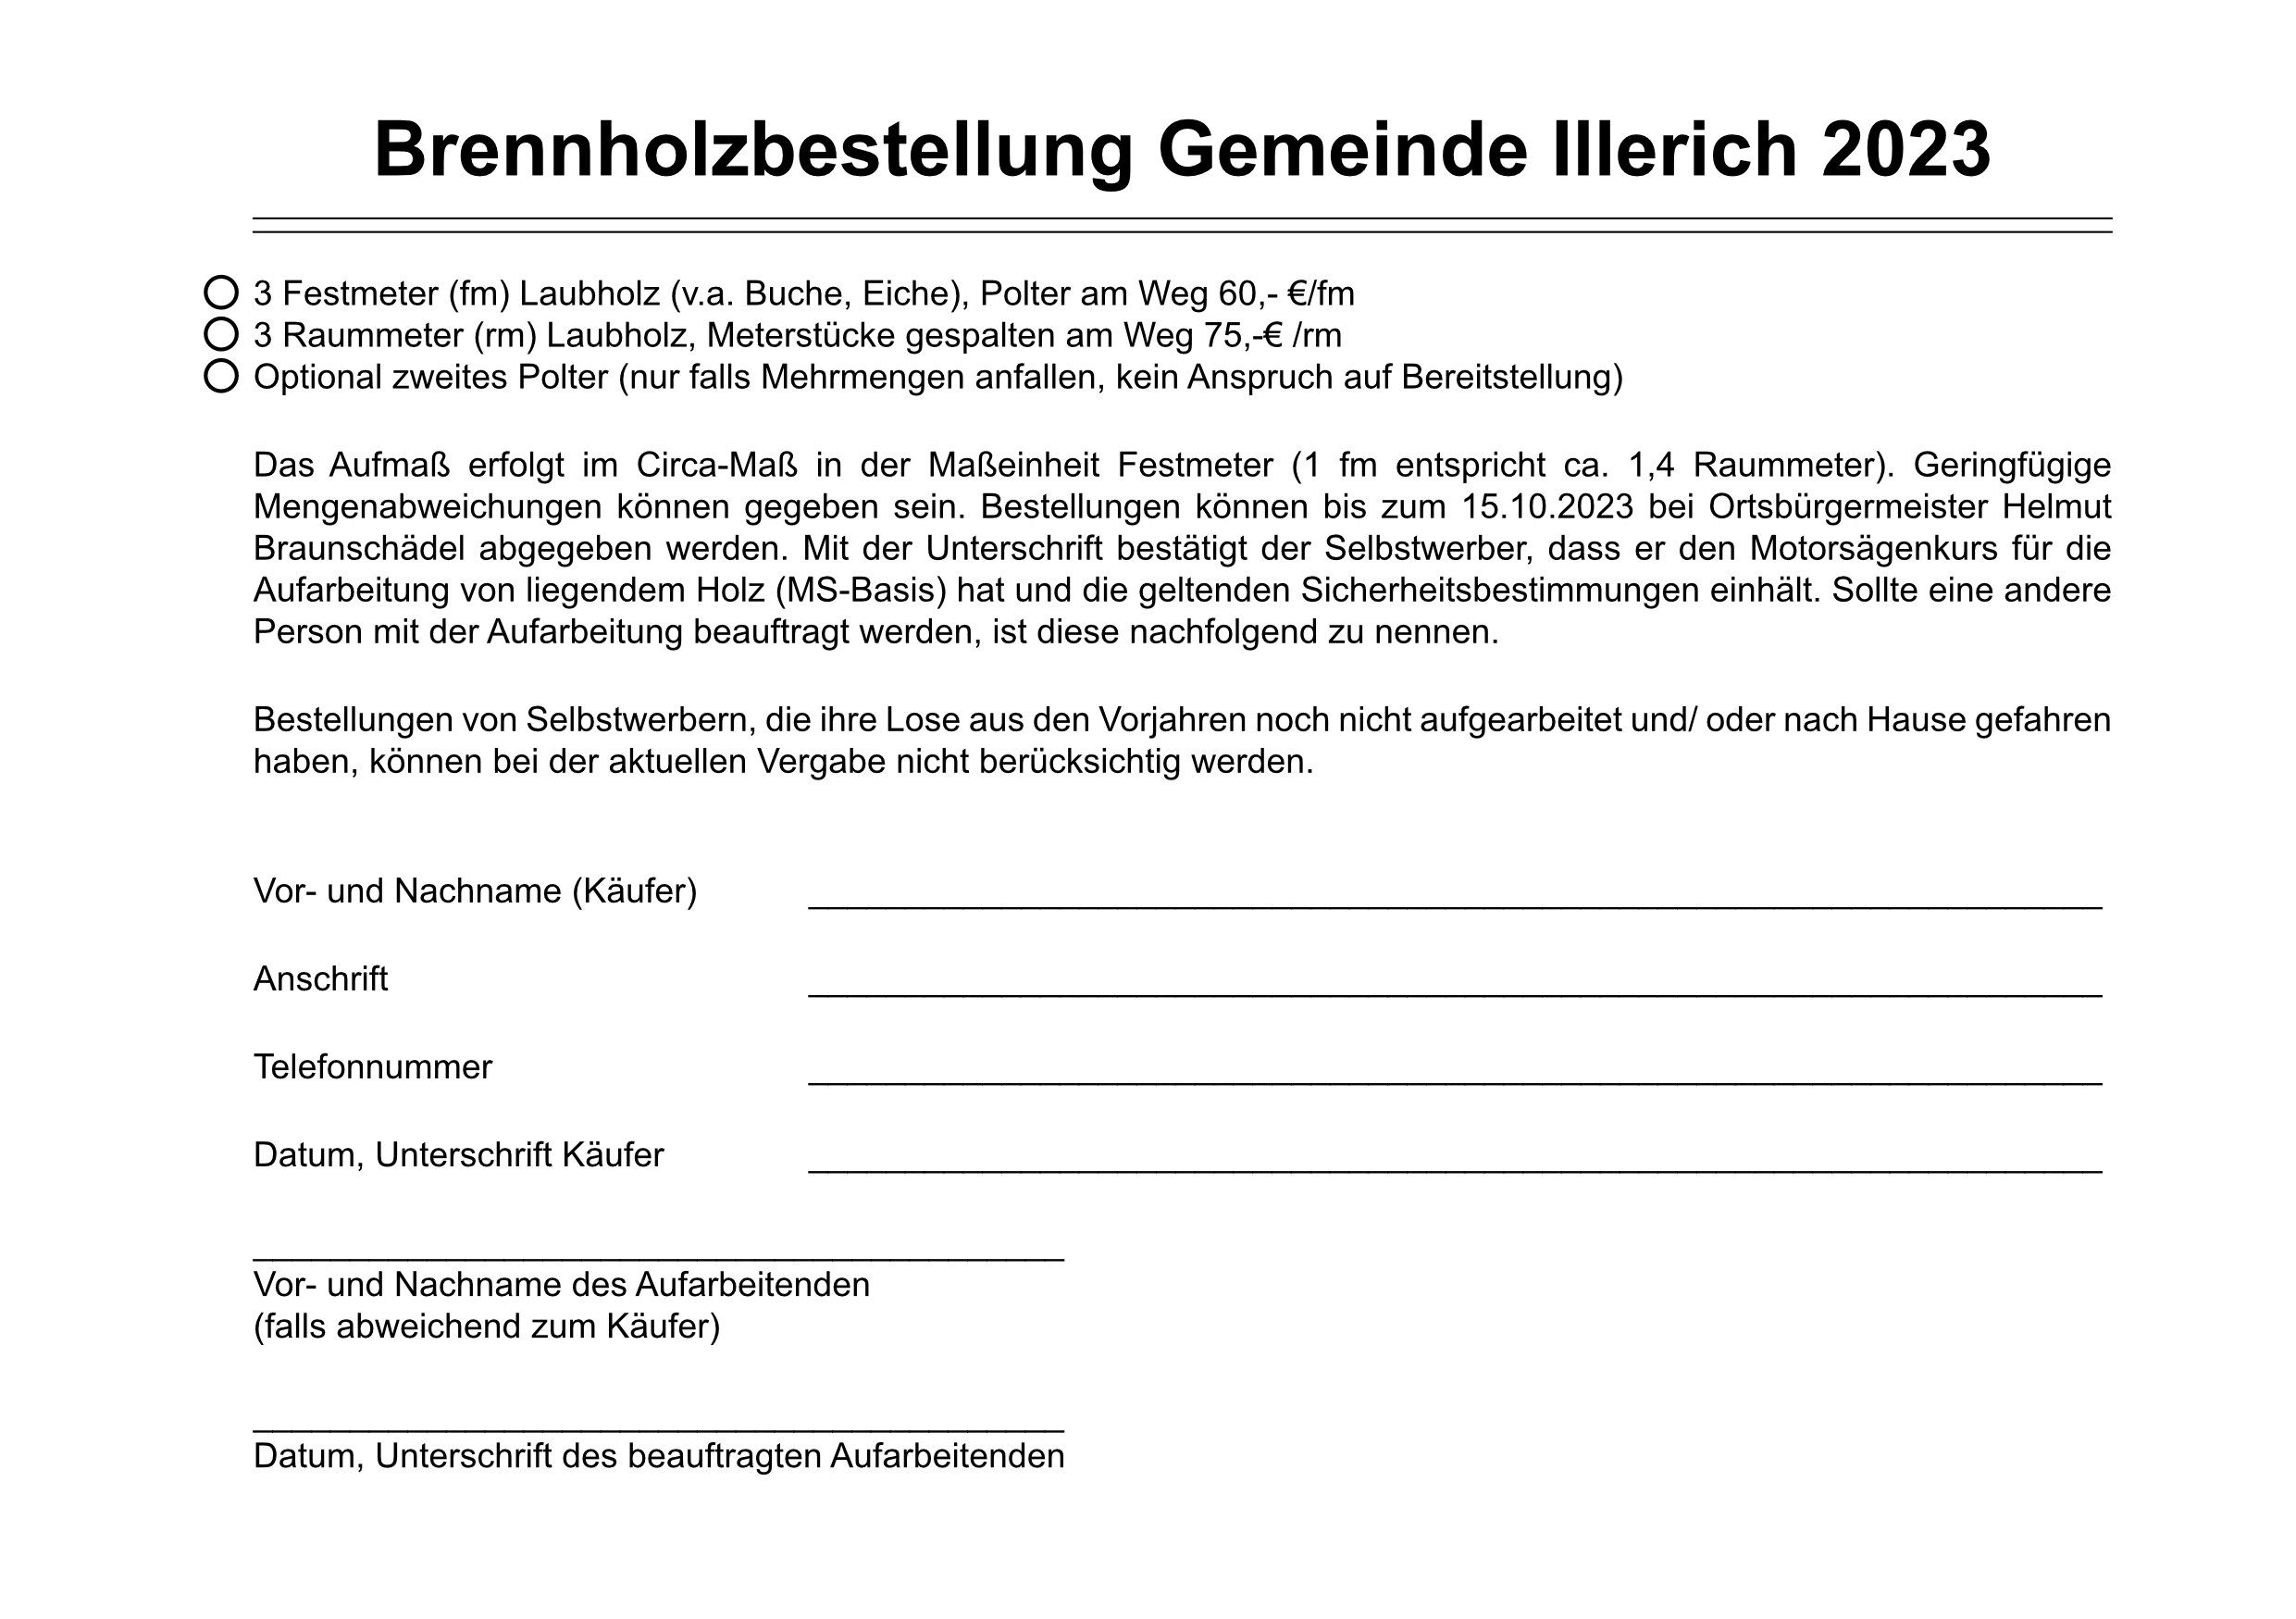 brennholz_2023